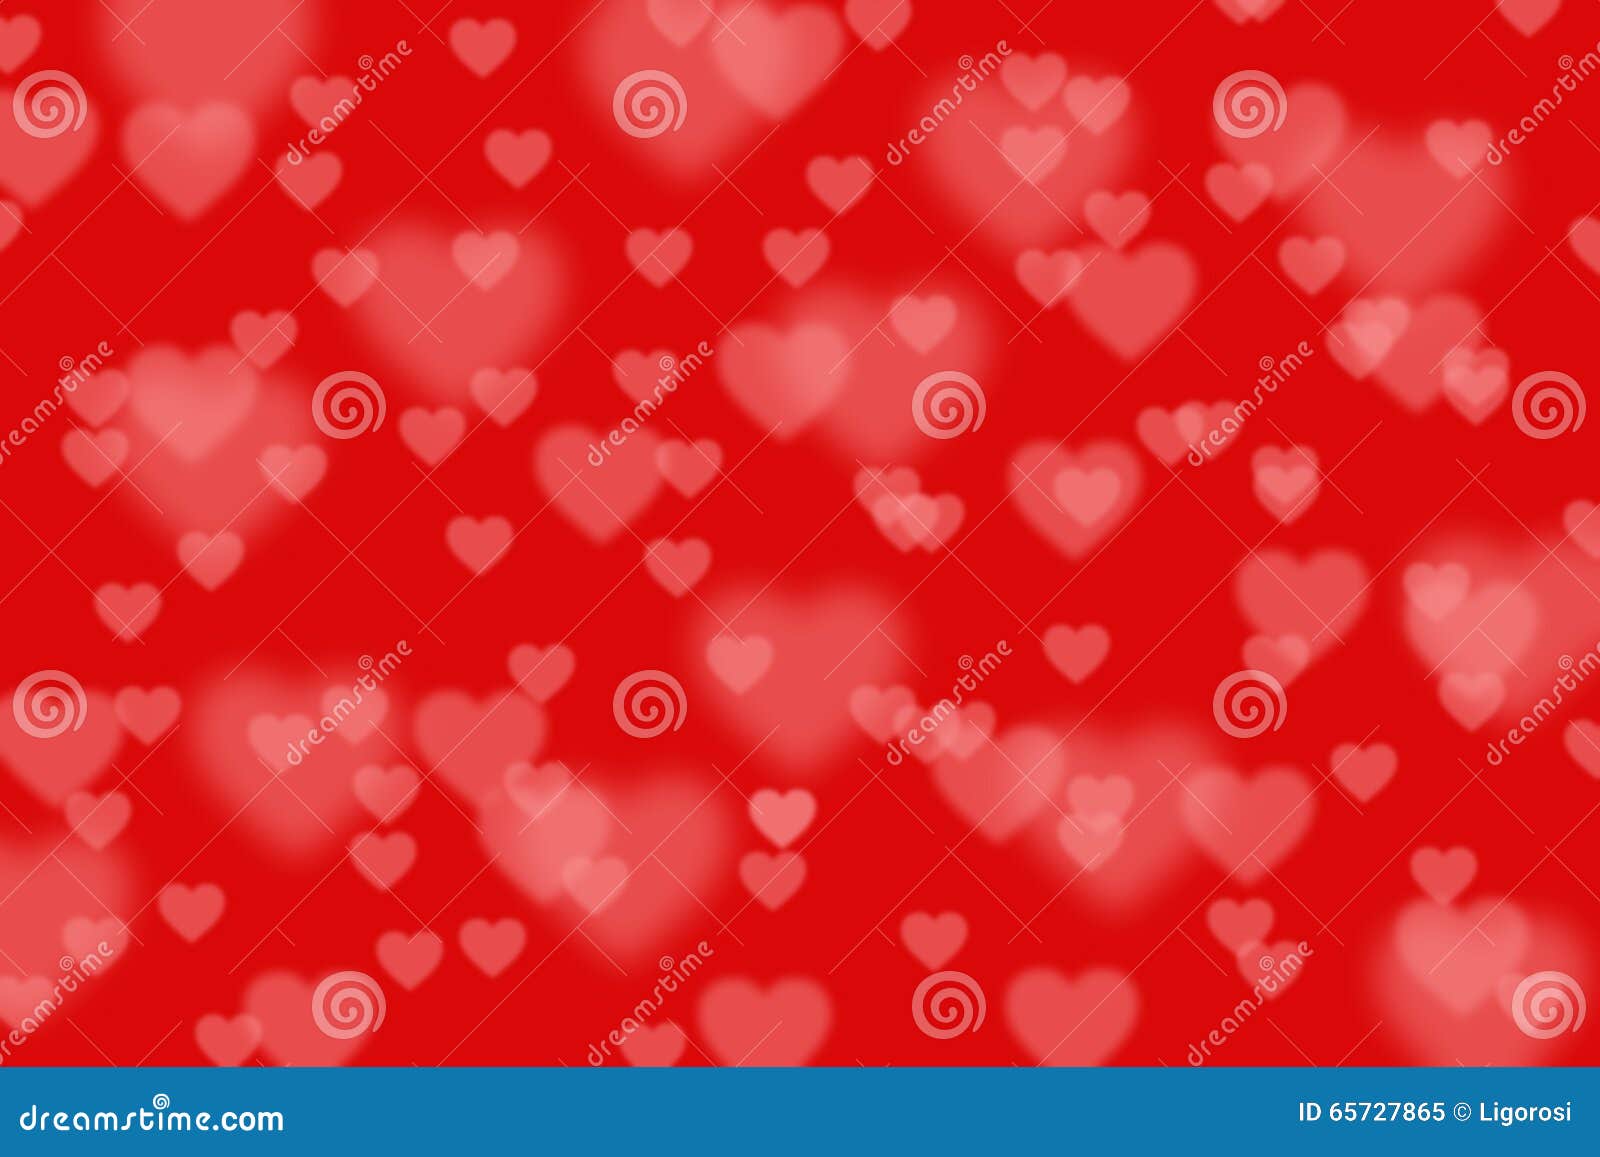 Love hearts background stock illustration. Illustration of clip - 65727865